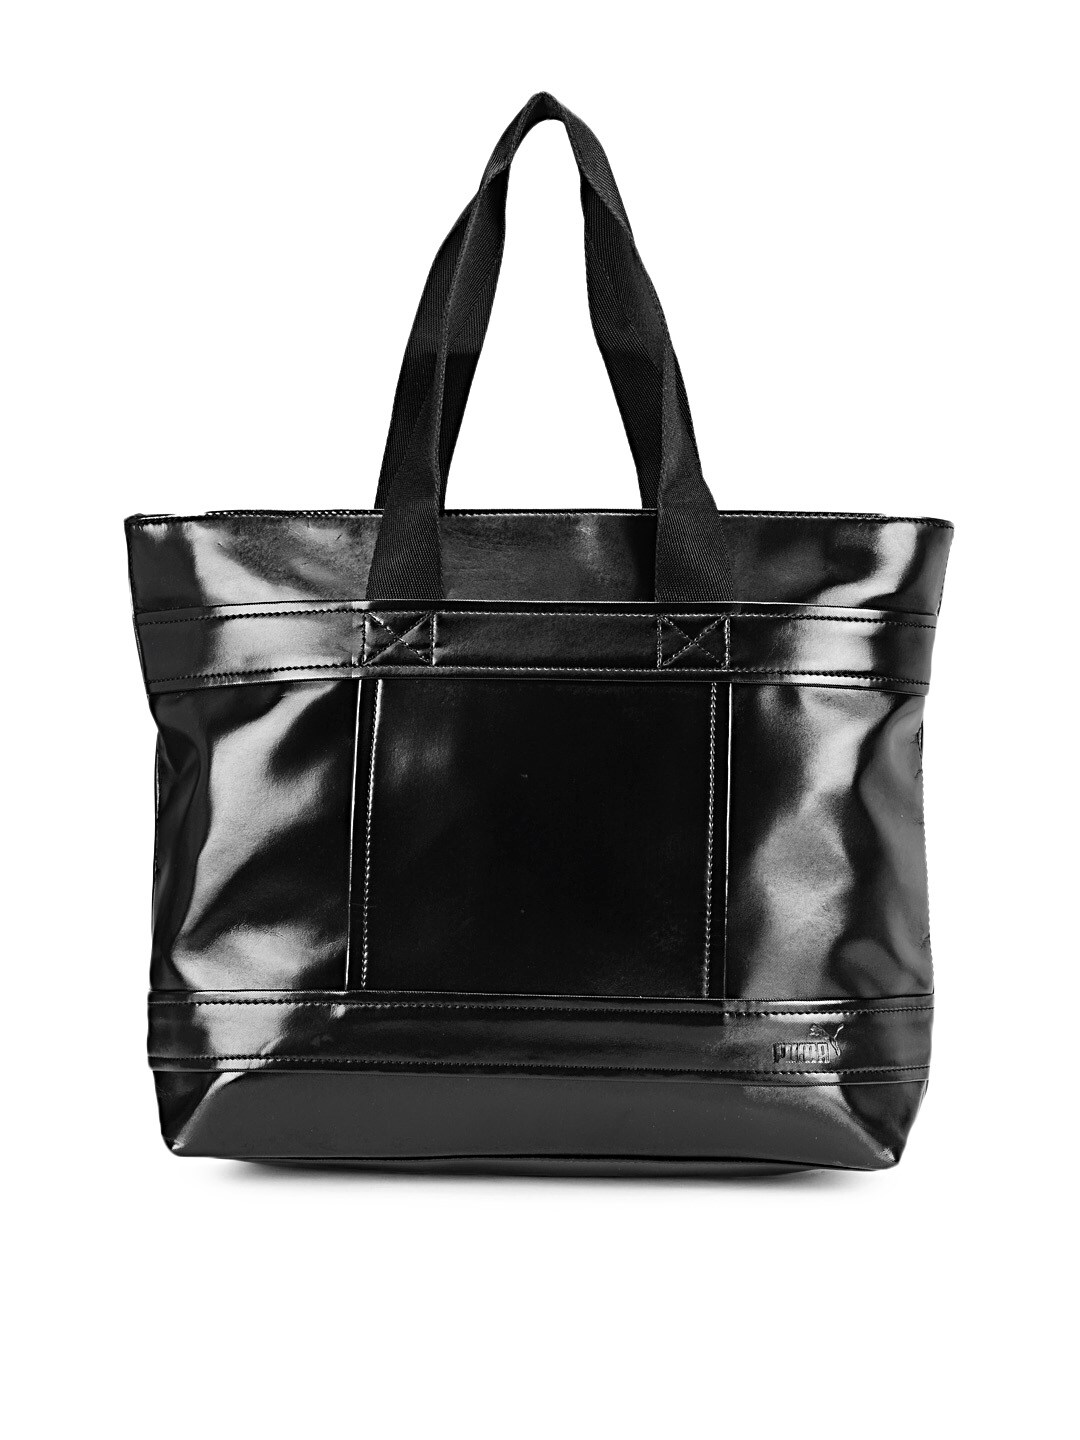 Puma Women Black Handbag